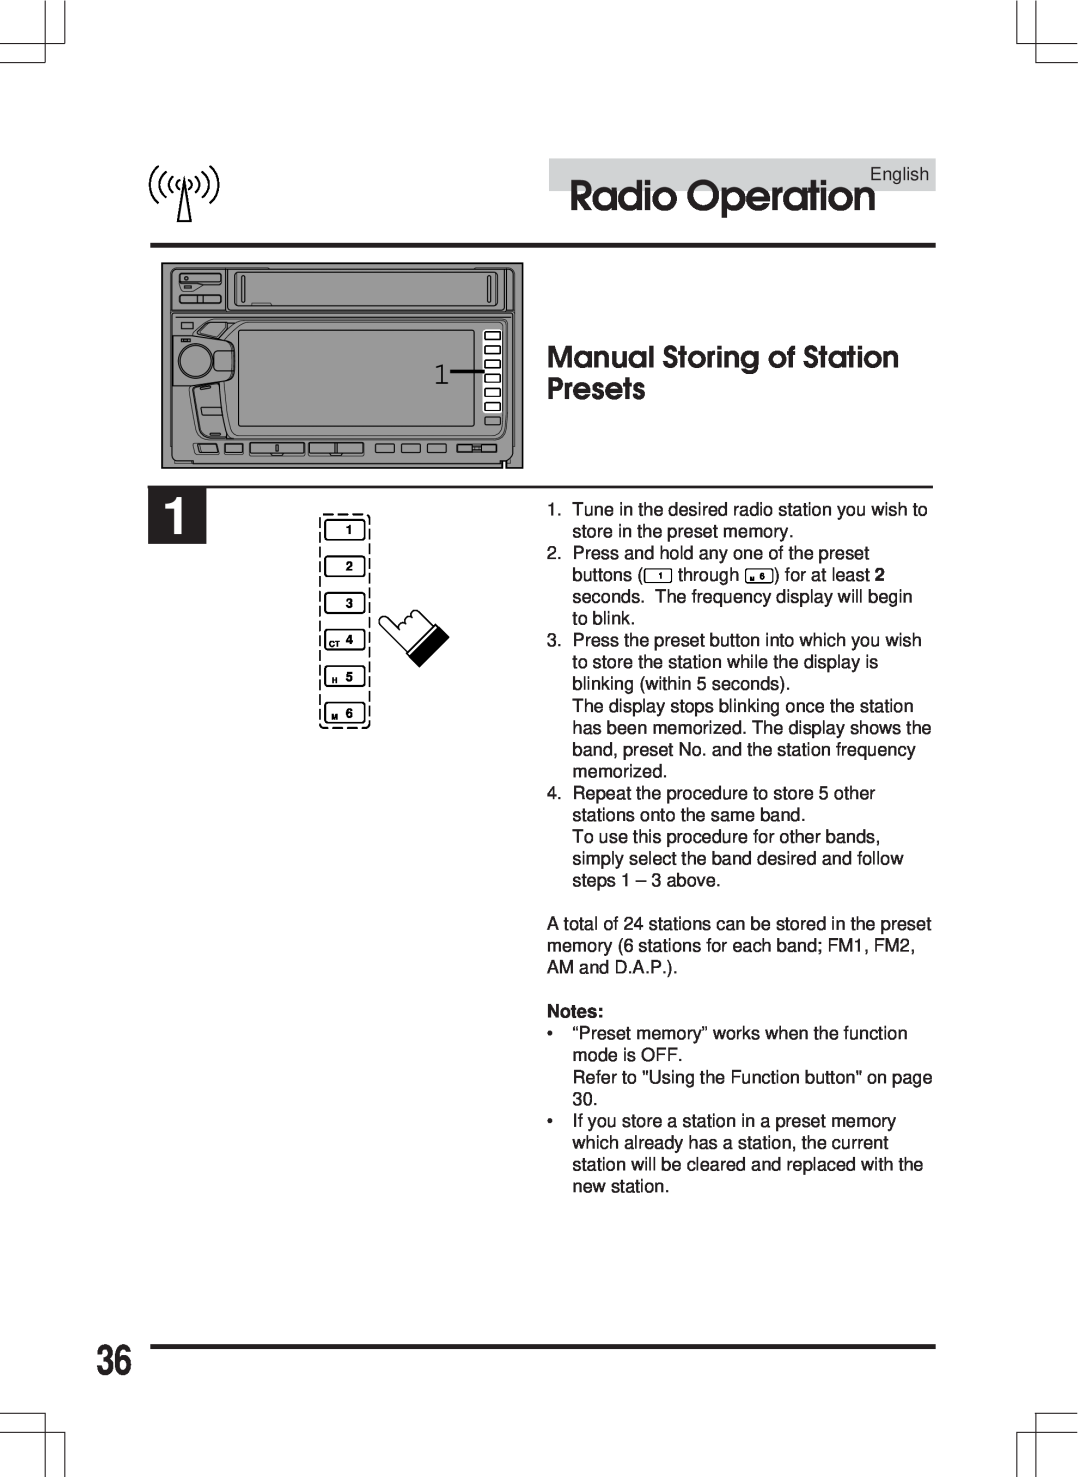 Alpine MDA-W890 owner manual Radio Operation English, Manual Storing of Station, Presets 